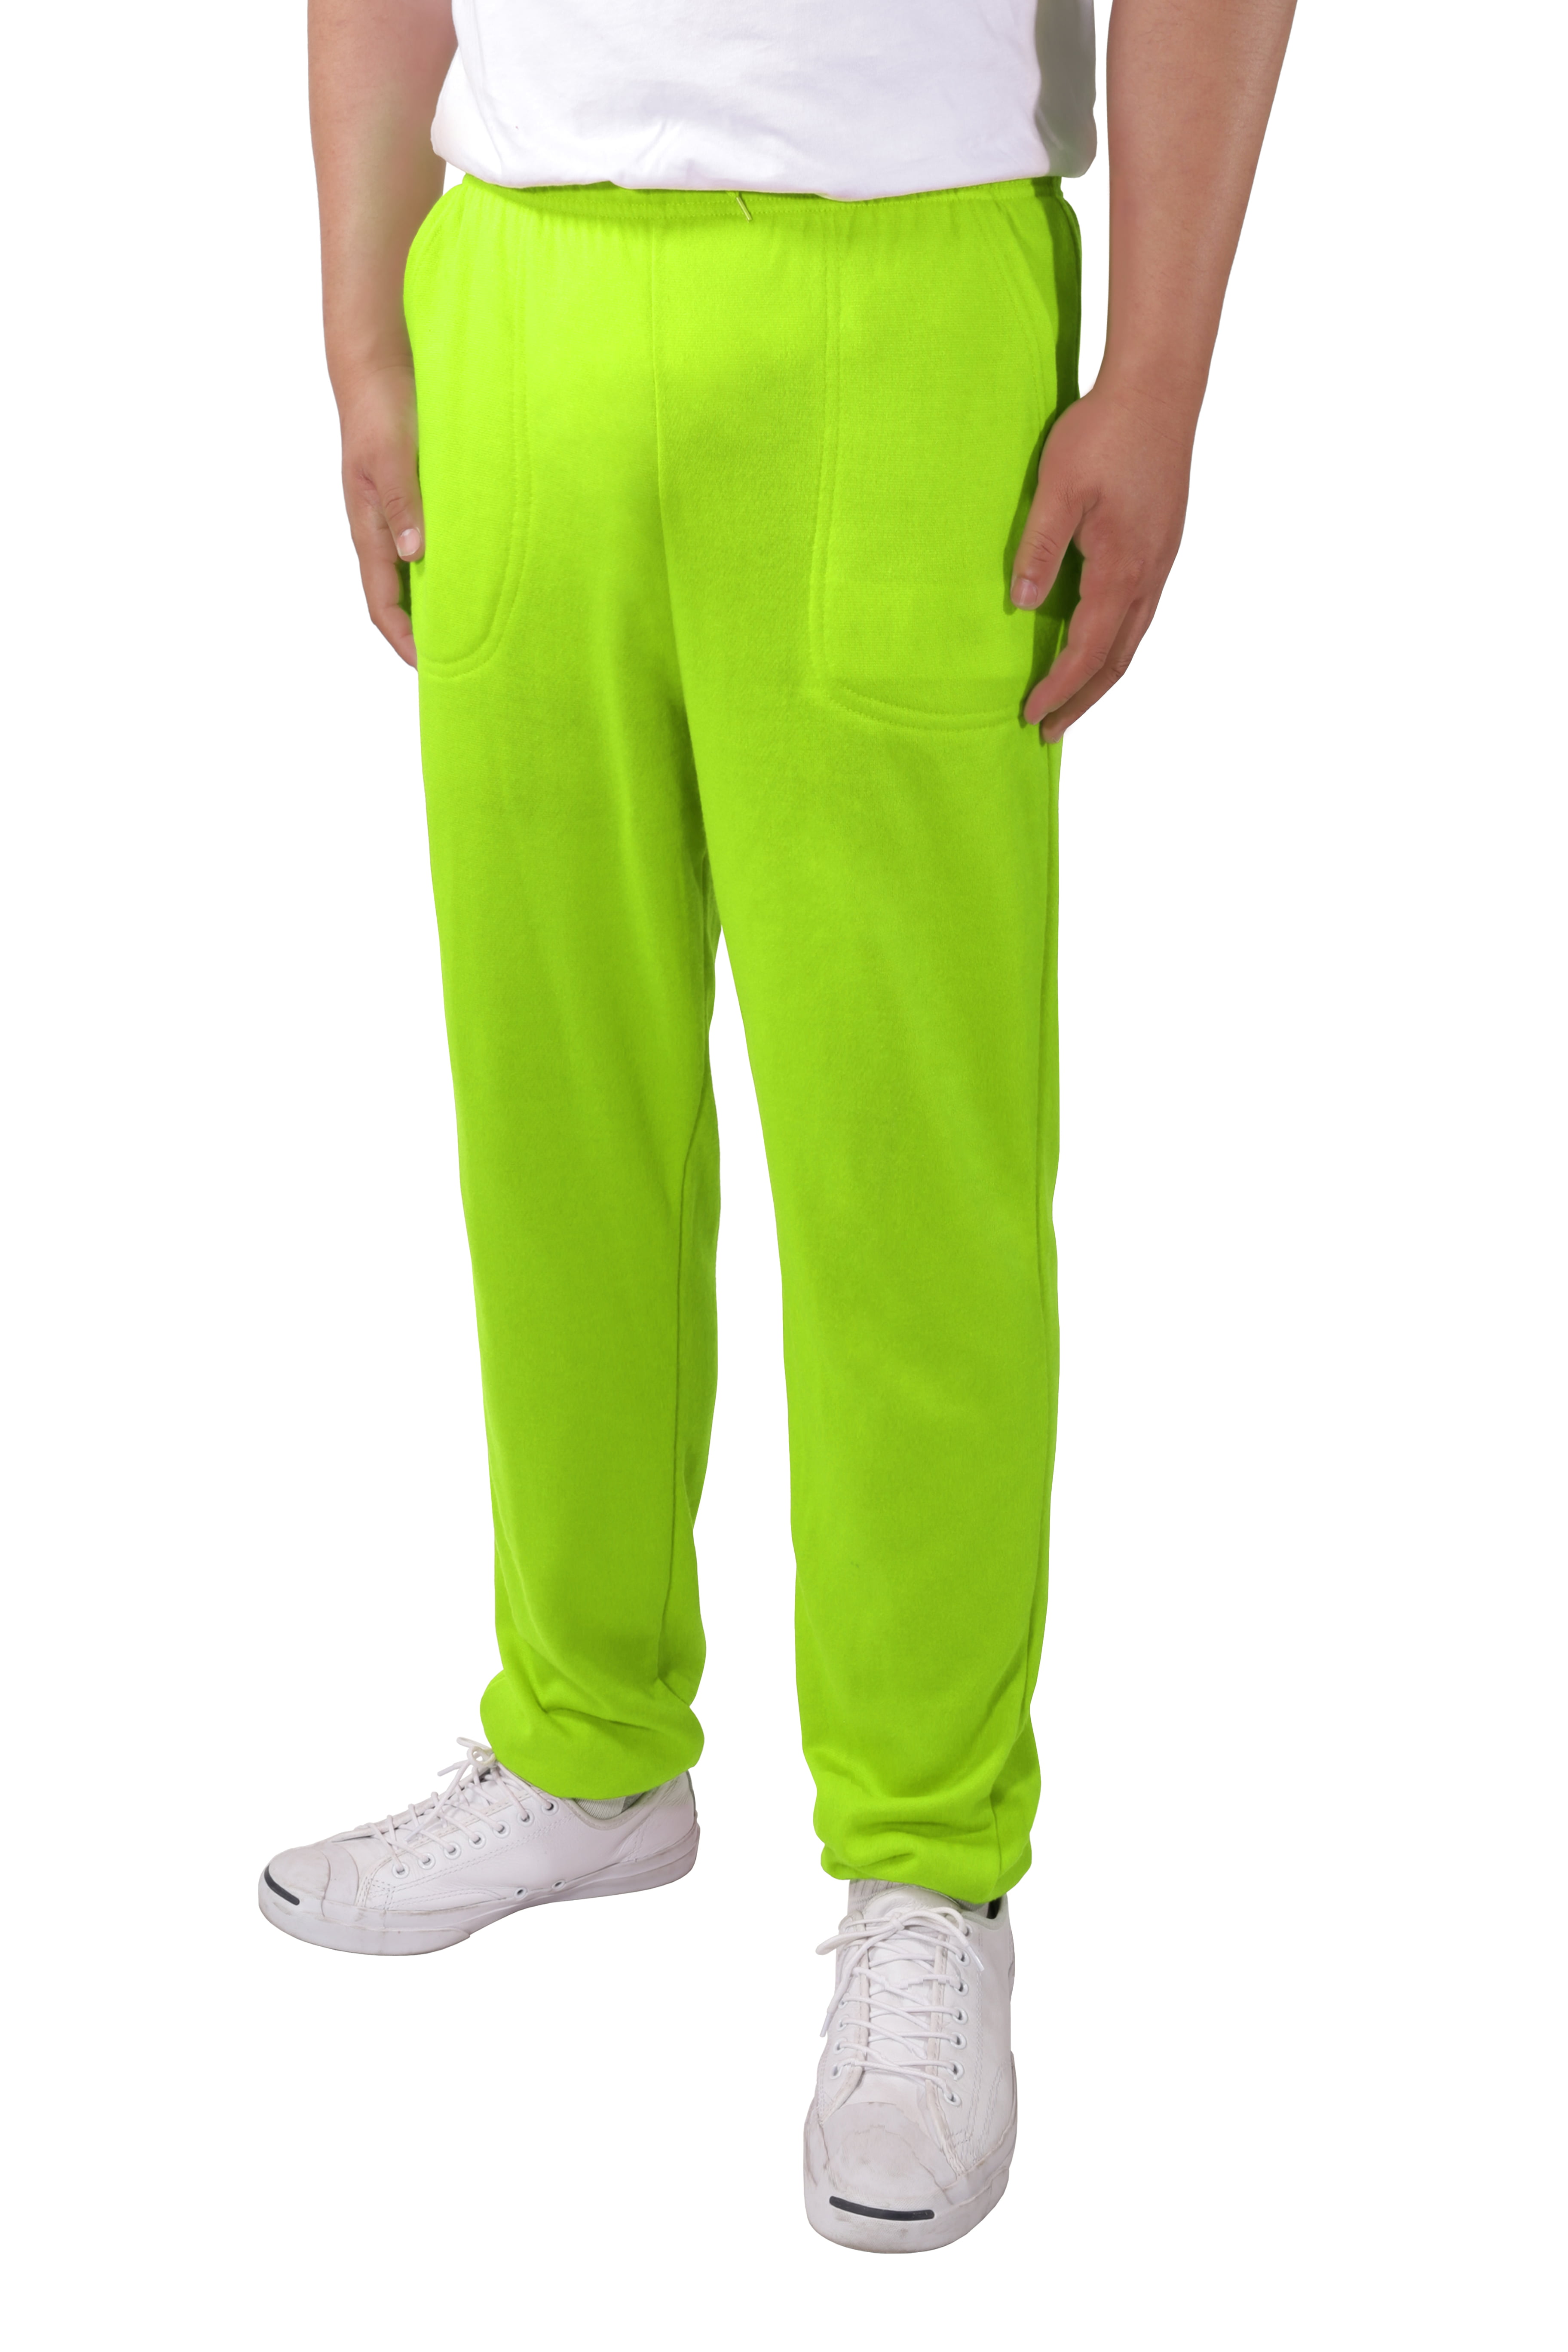 ALO Yoga Unwind Sweatpants French Terry Cozy Jogger Pants, XS, Neon Lime  Green